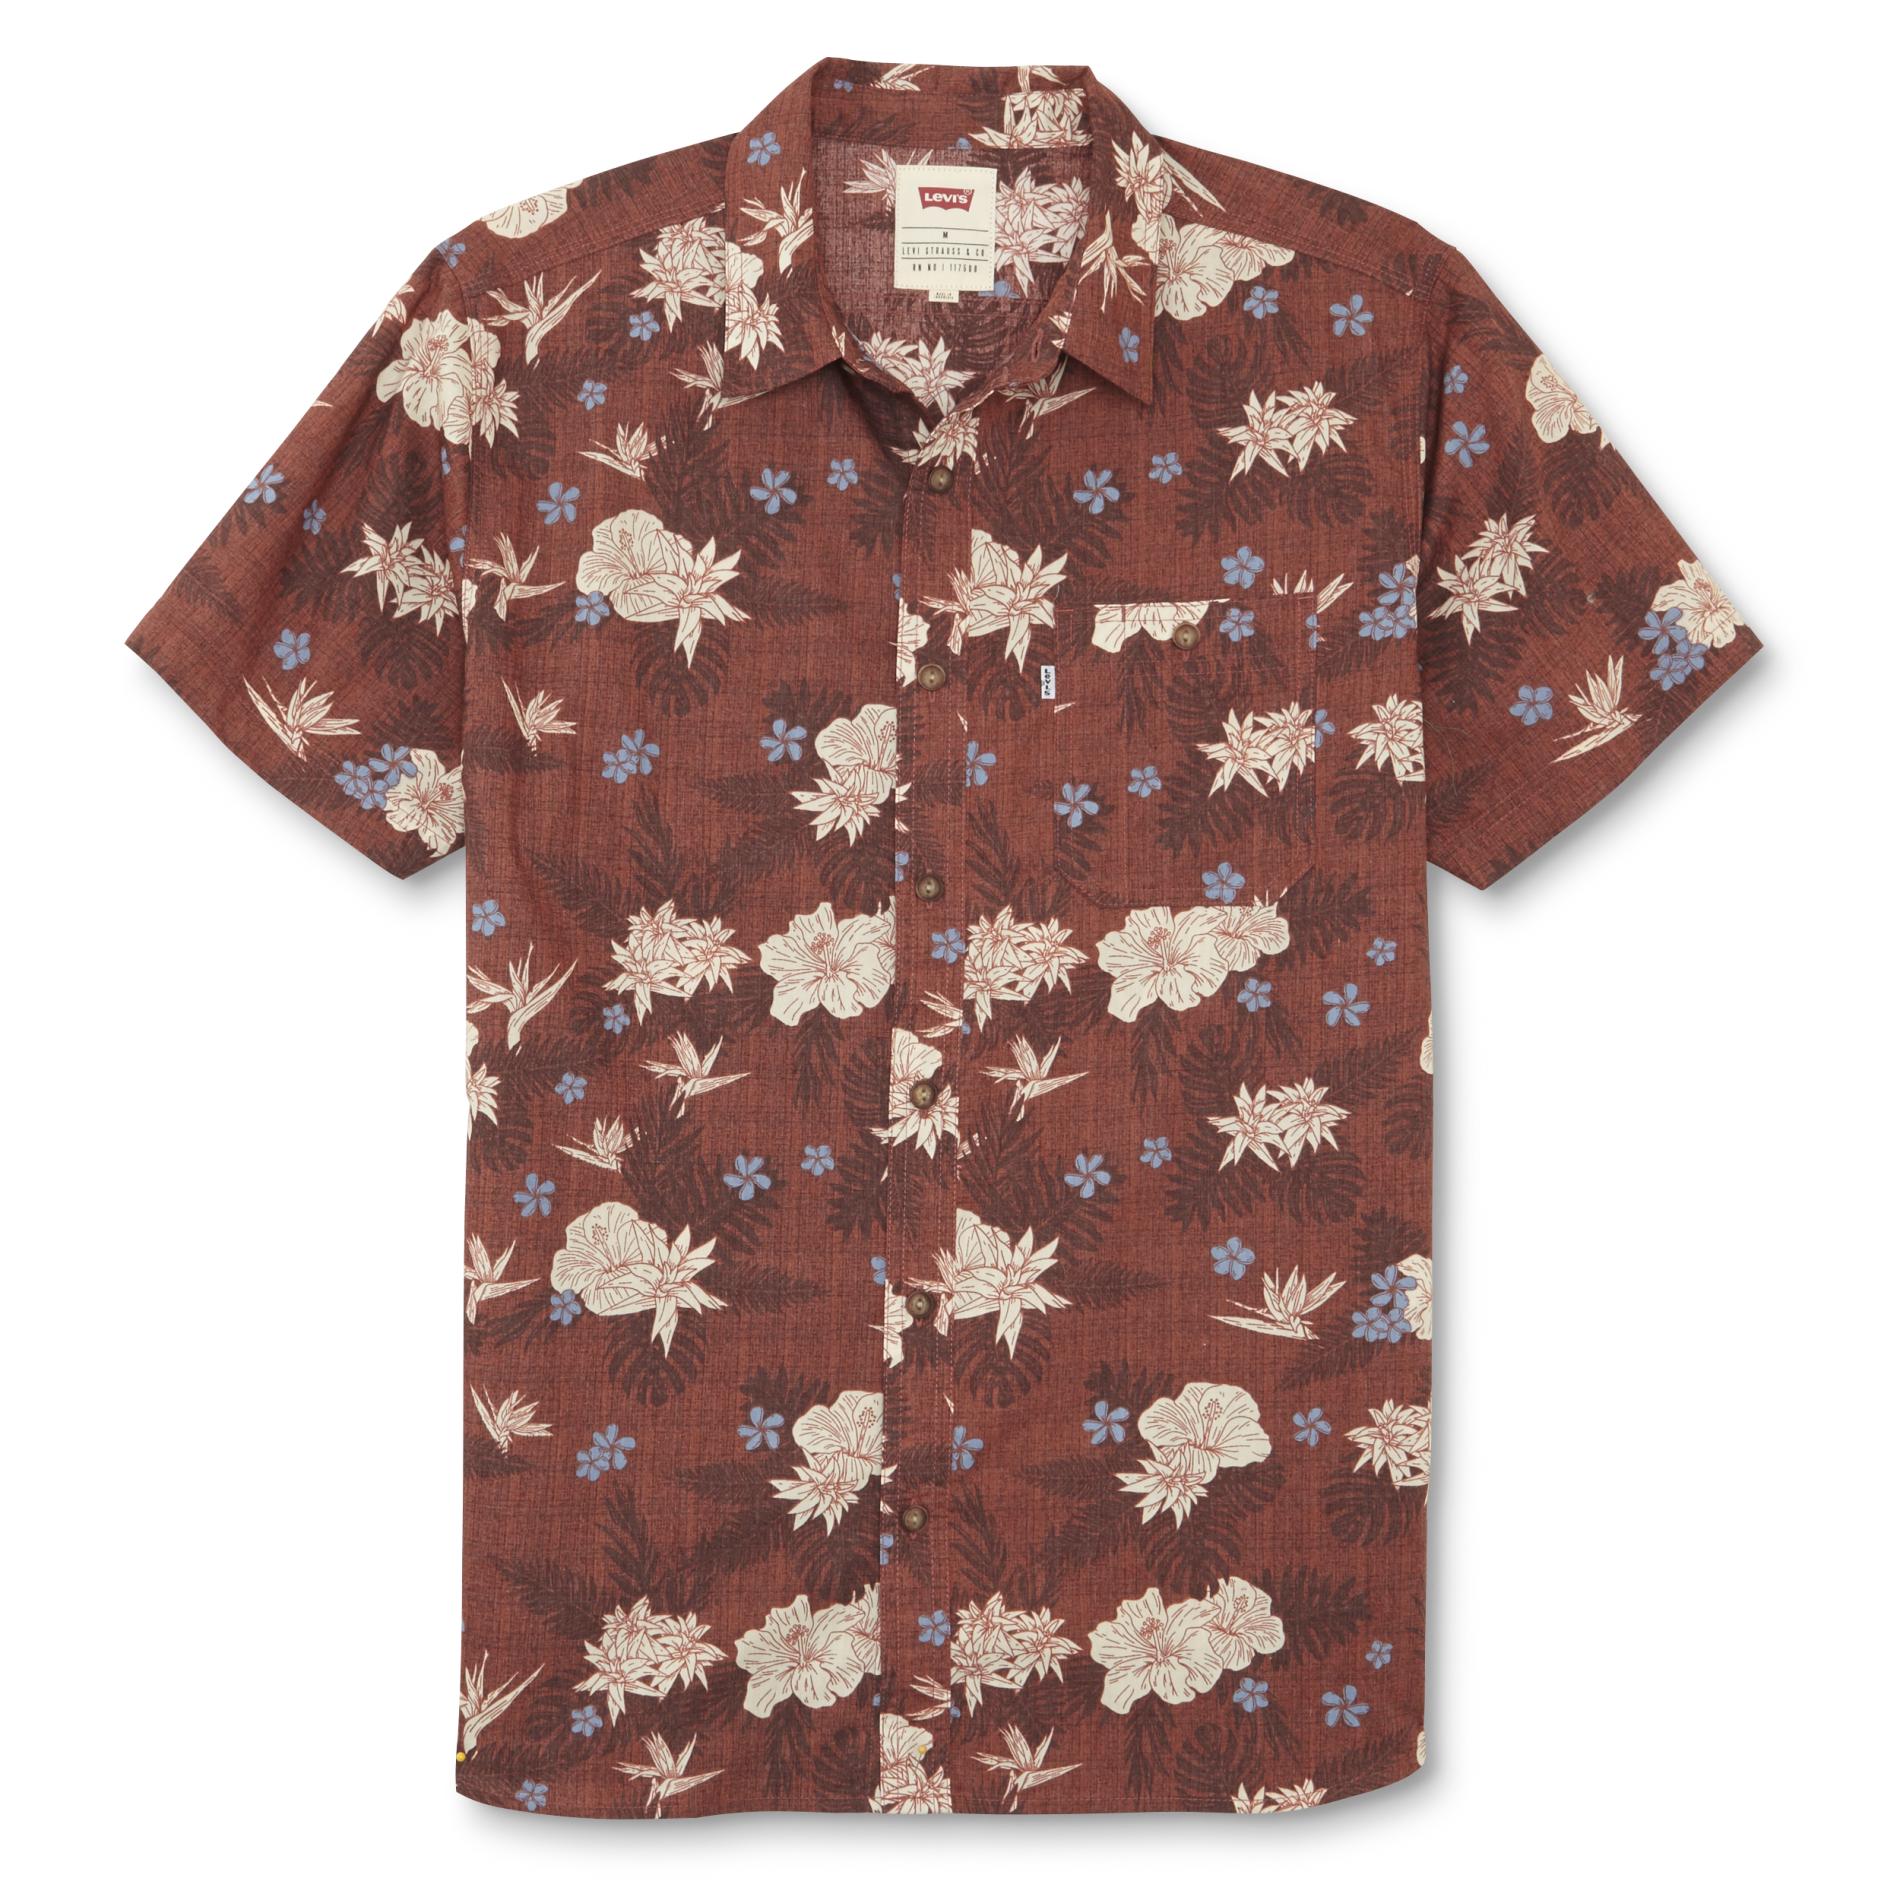 Levi's Men's Short-Sleeve Shirt - Floral Print